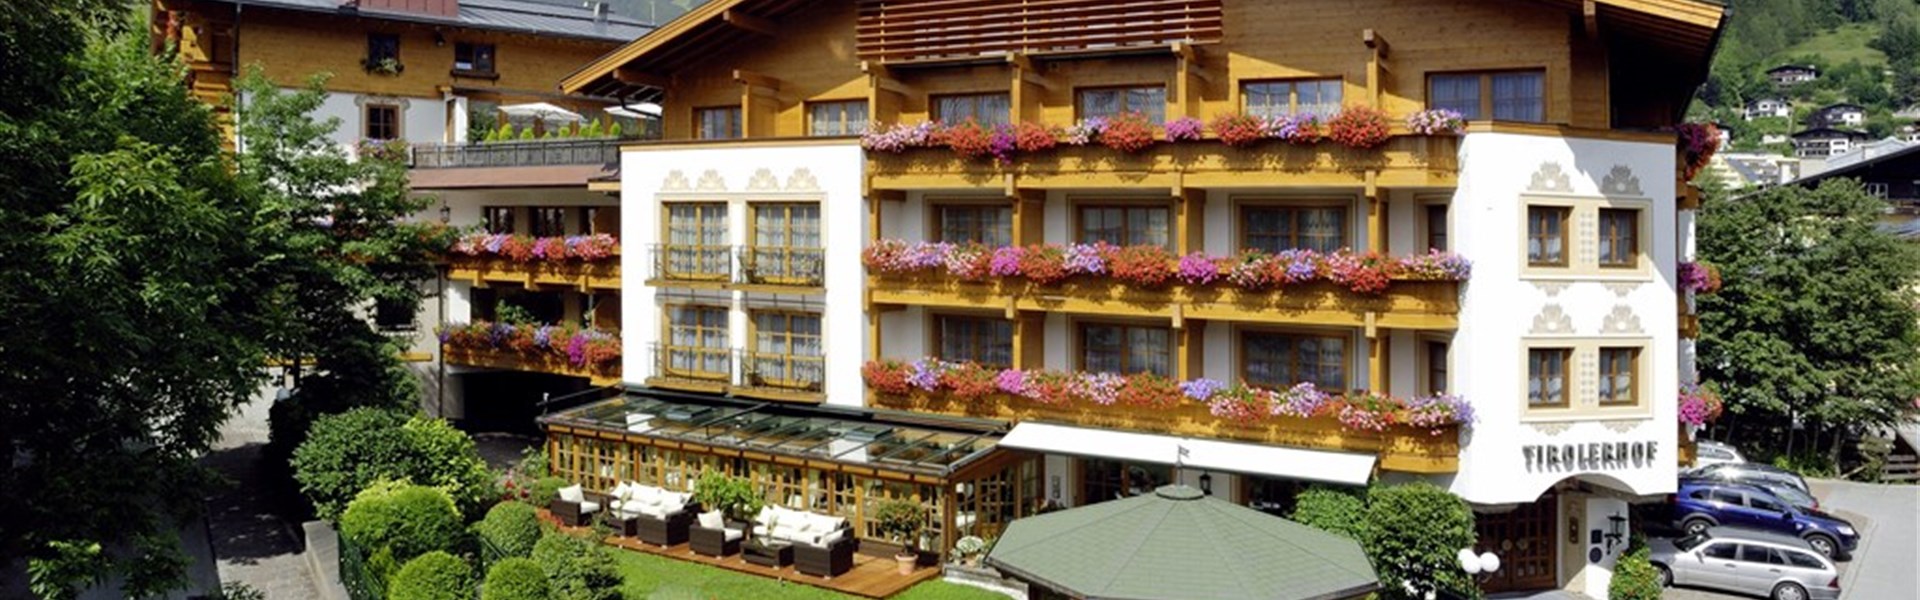 Hotel Tirolerhof (S) - 